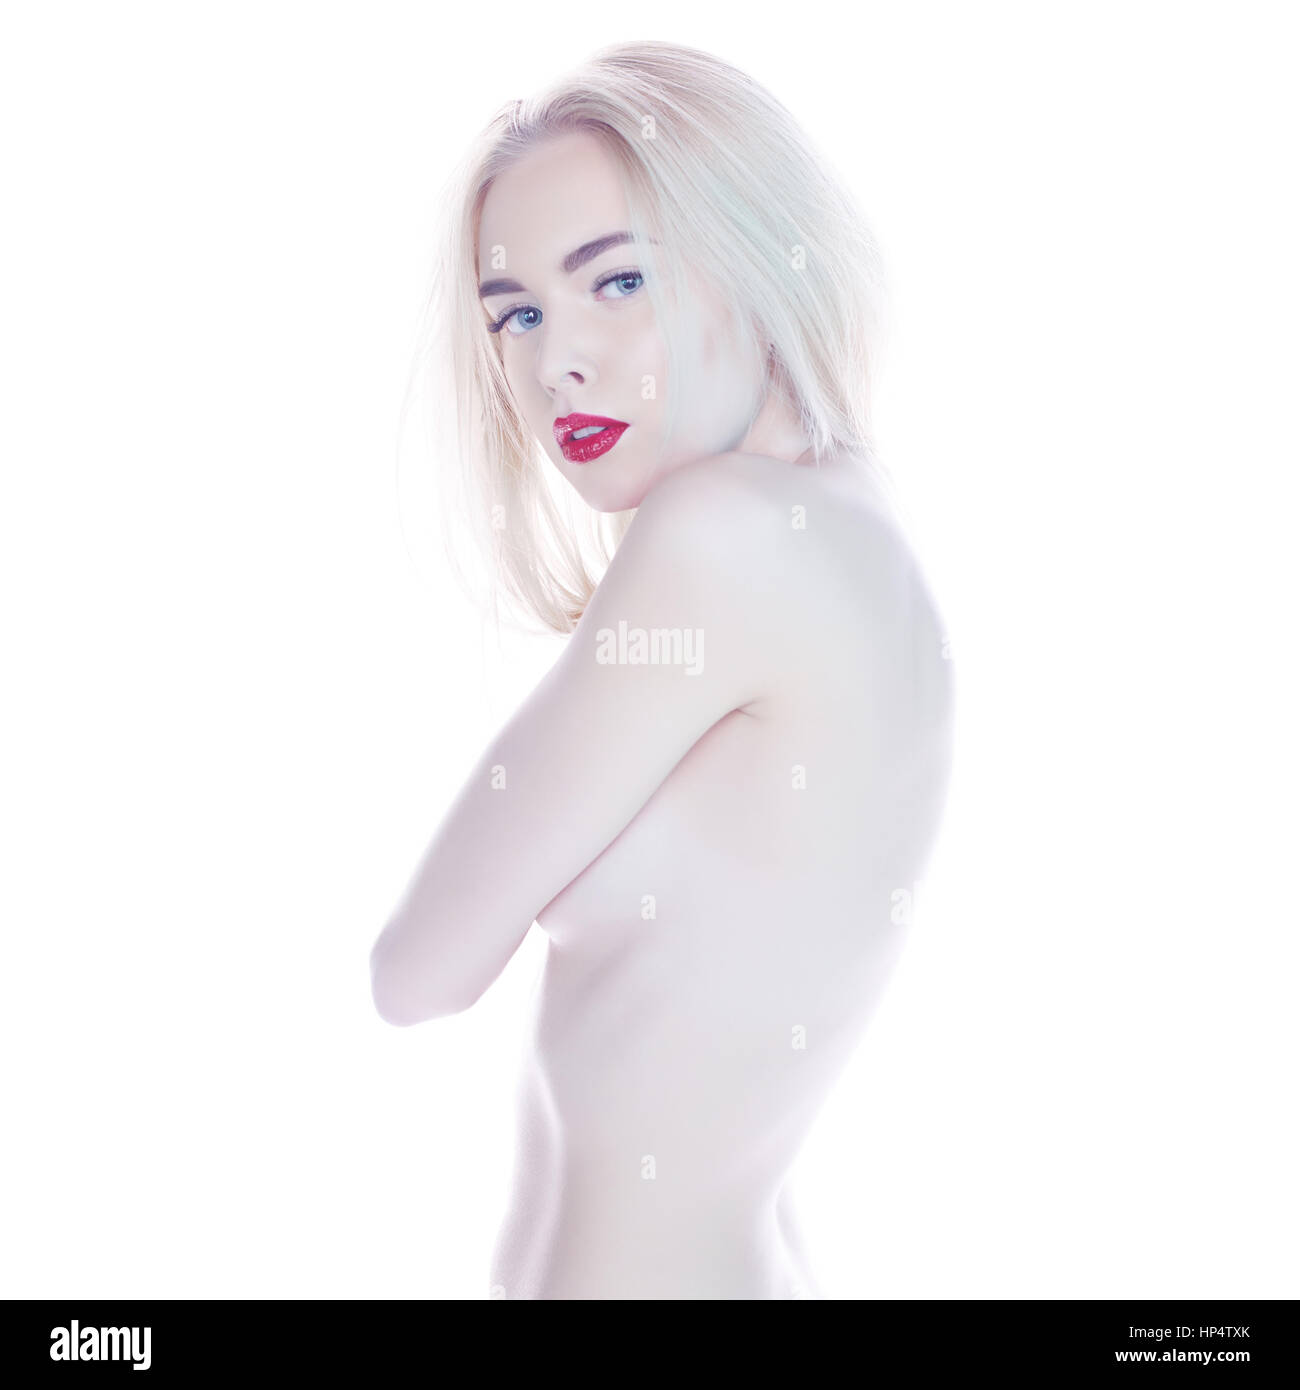 Blonde white nude